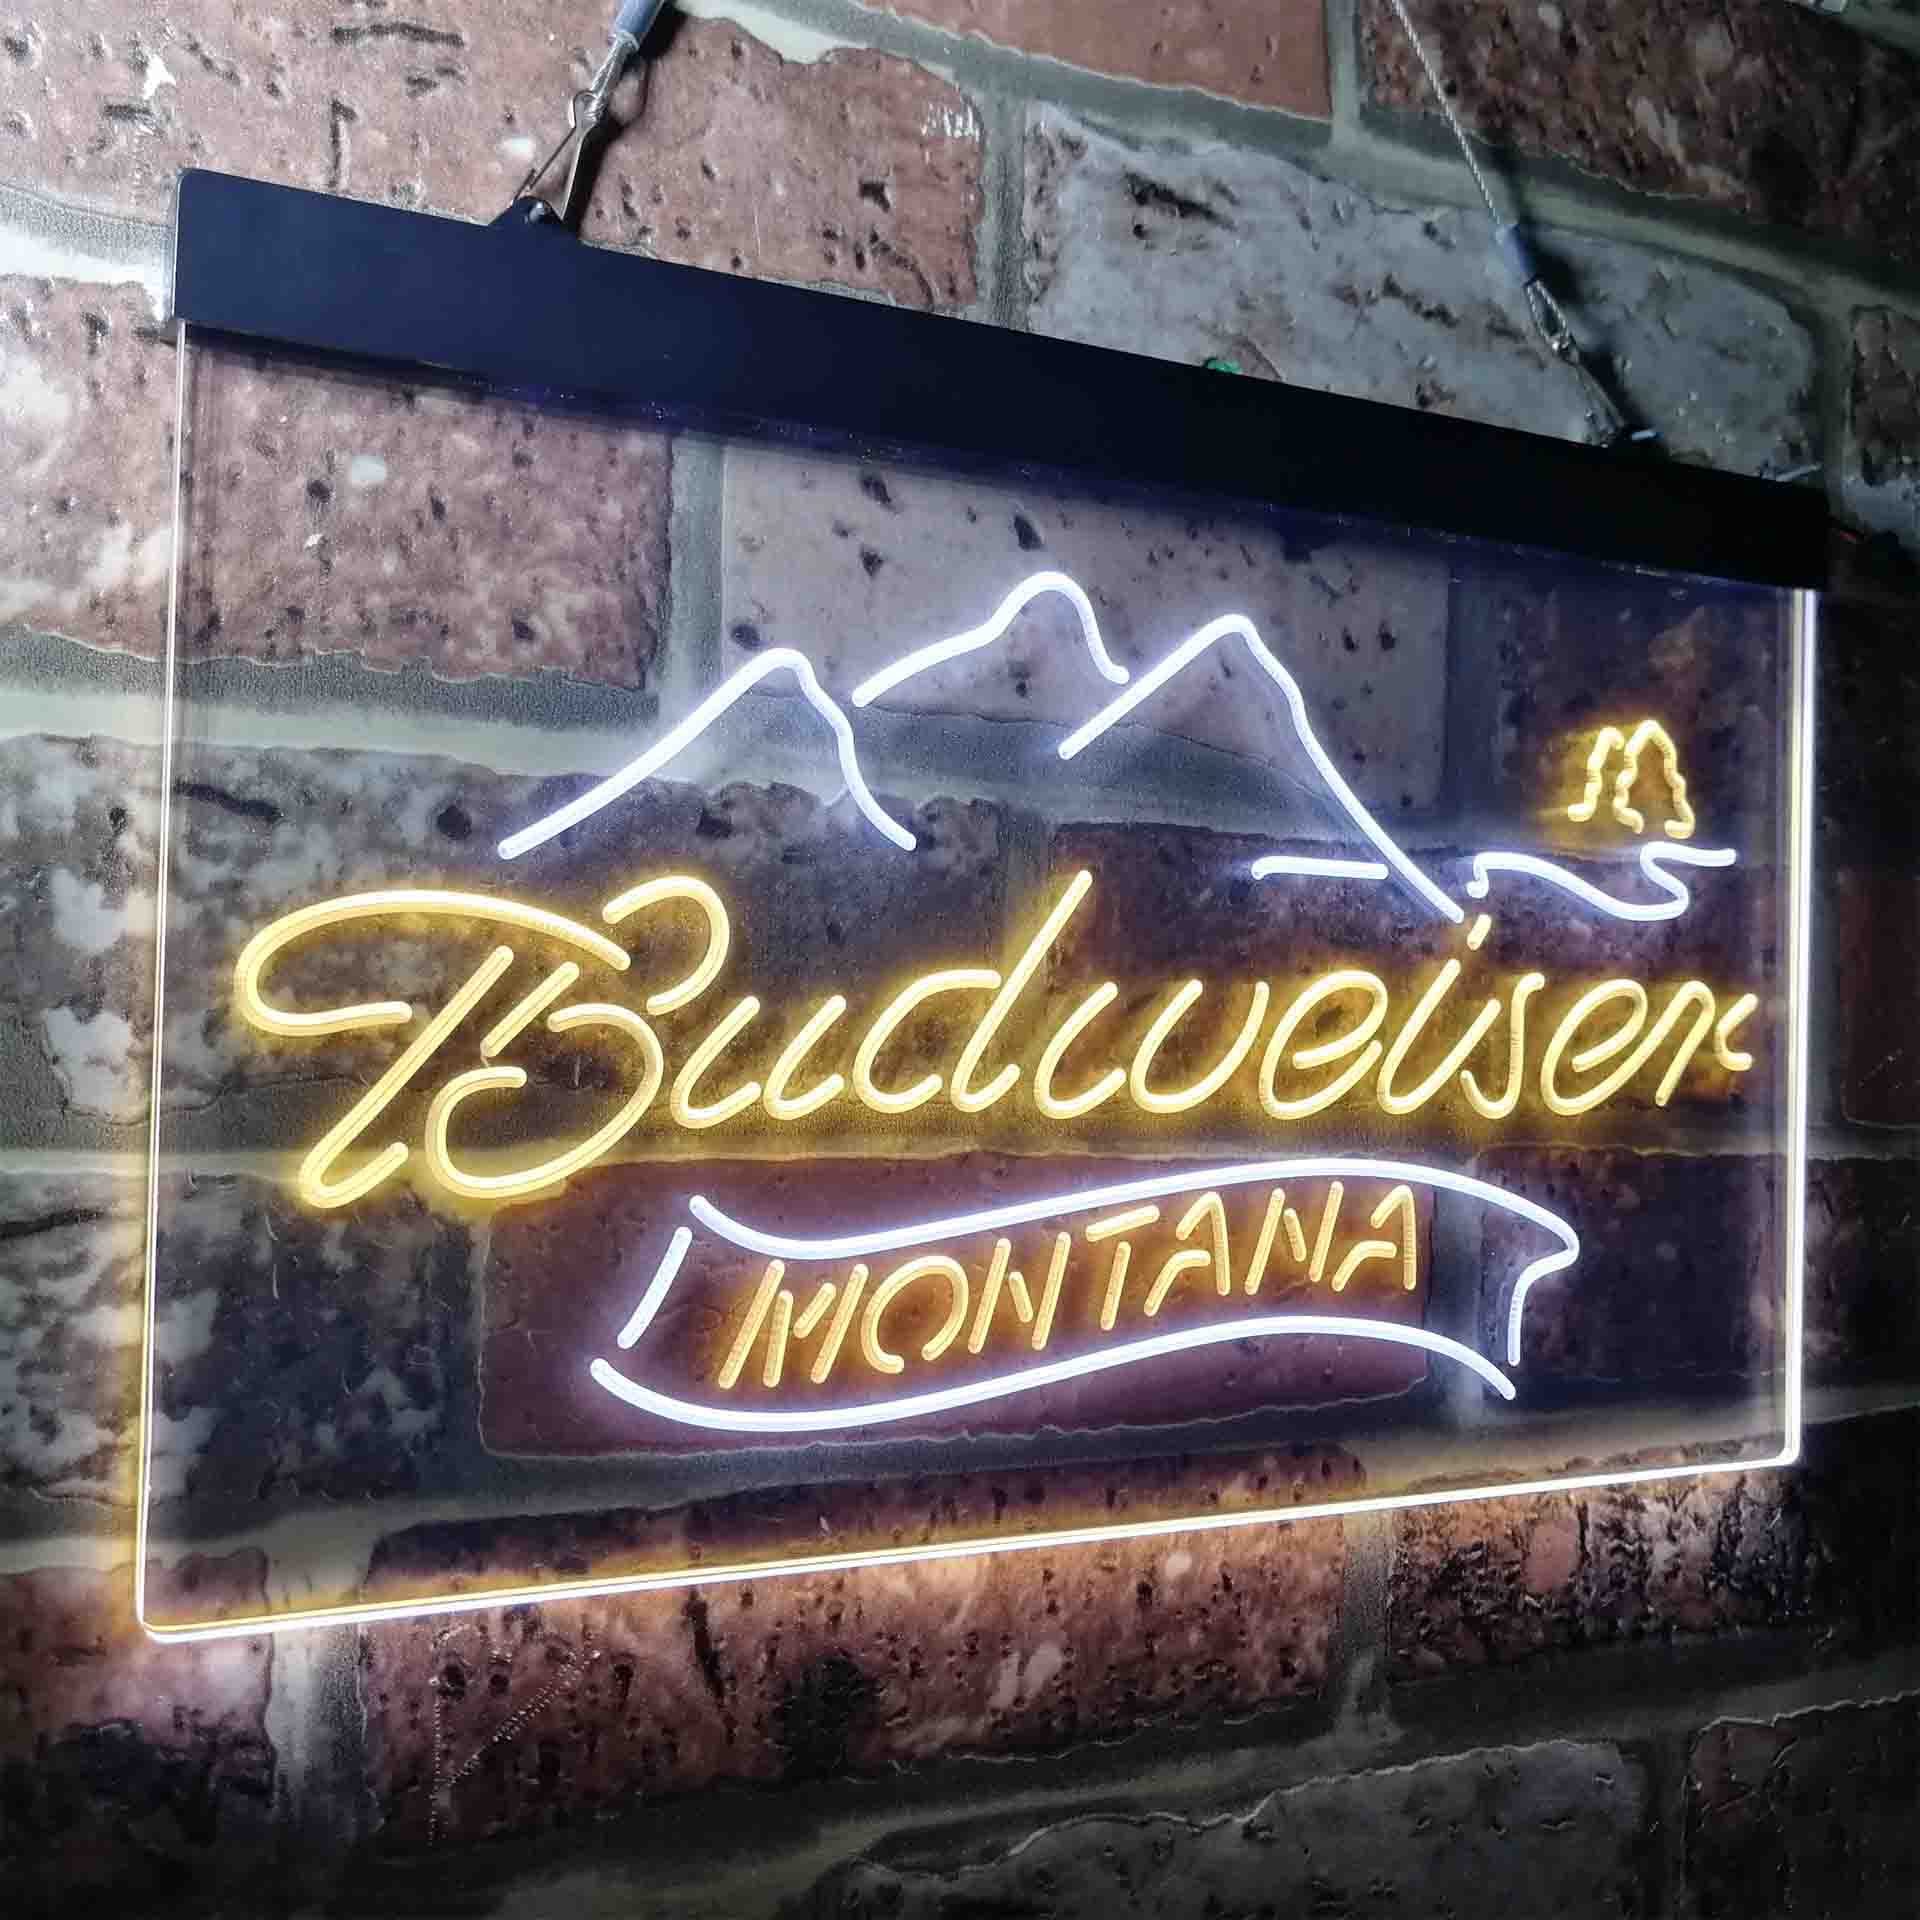 Budweiser Montana Neon-Like LED Sign